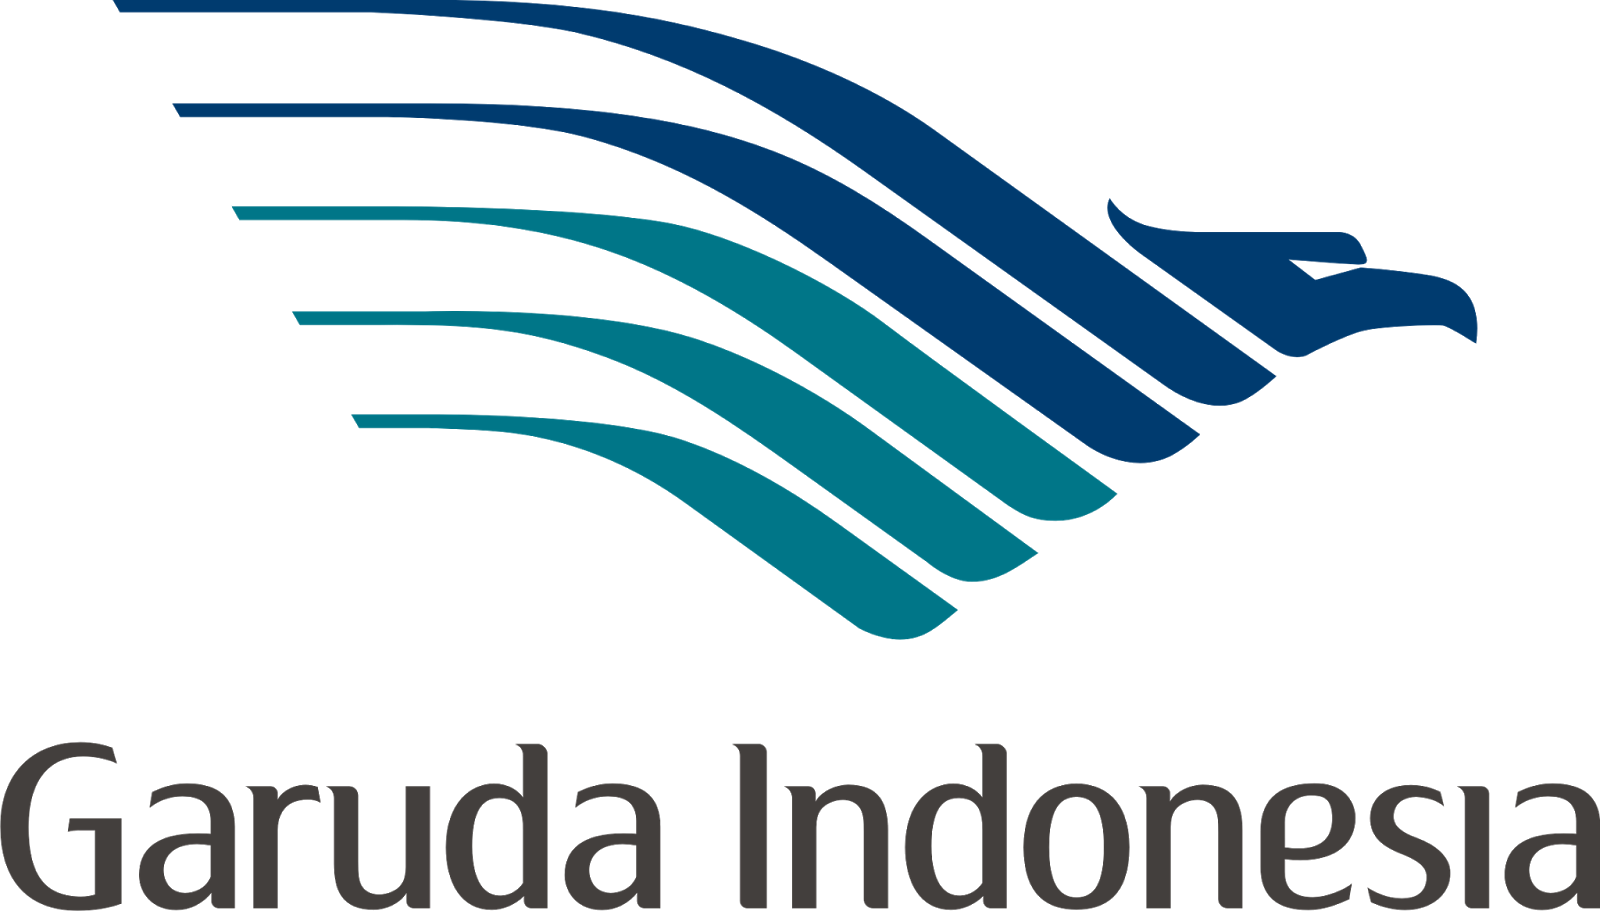  Logo  Garuda  Indonesia  Airways Free Vector CDR Logo  